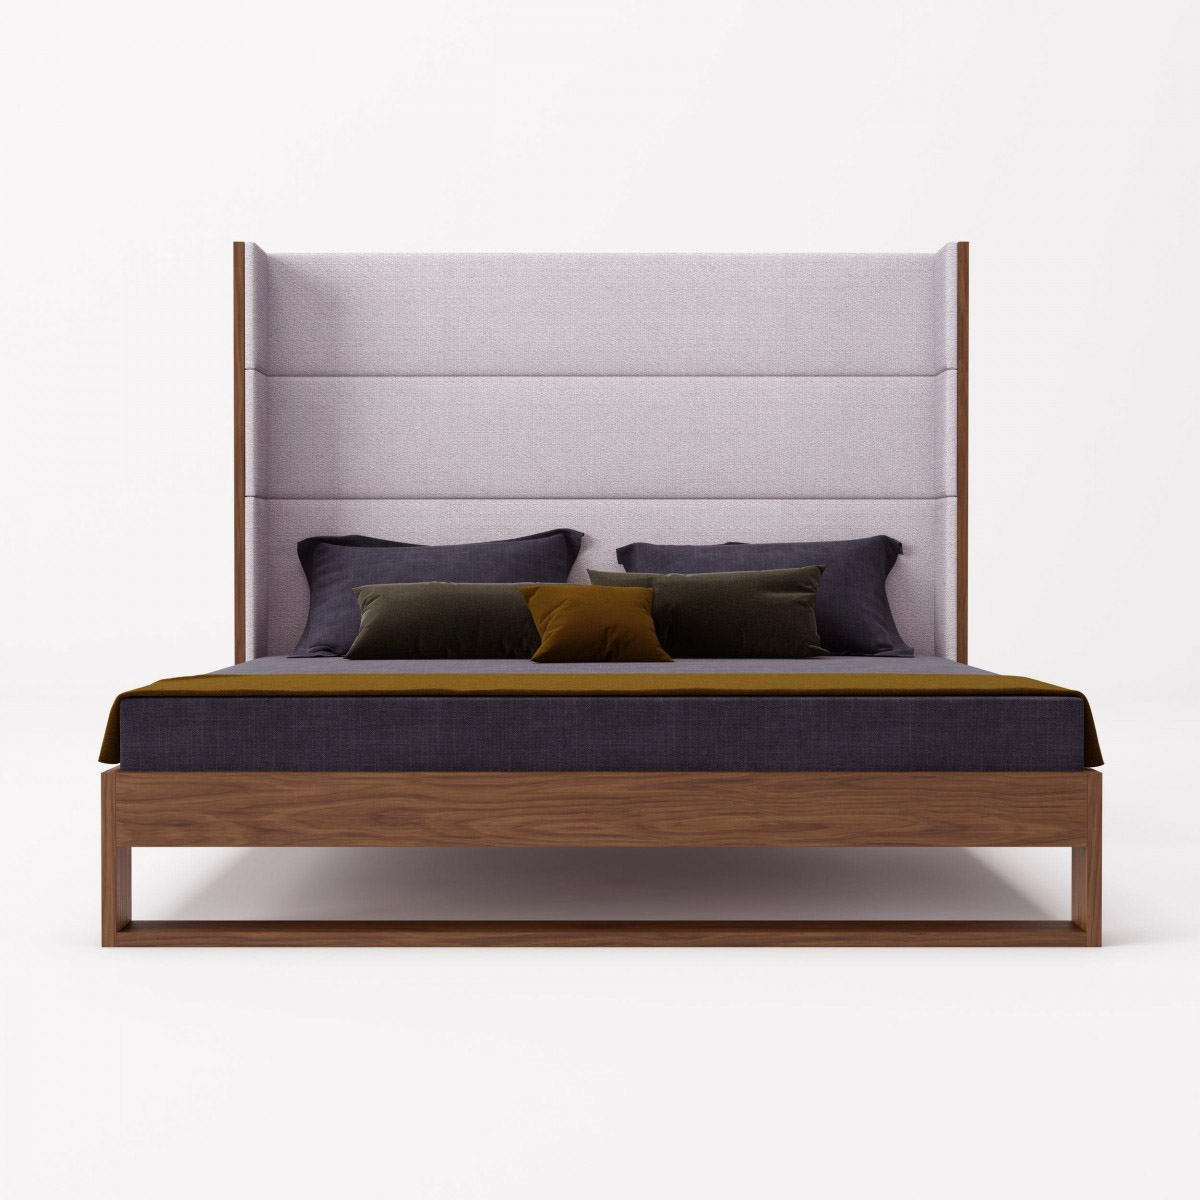 Luxury Elite Furniture Set with High Headboard